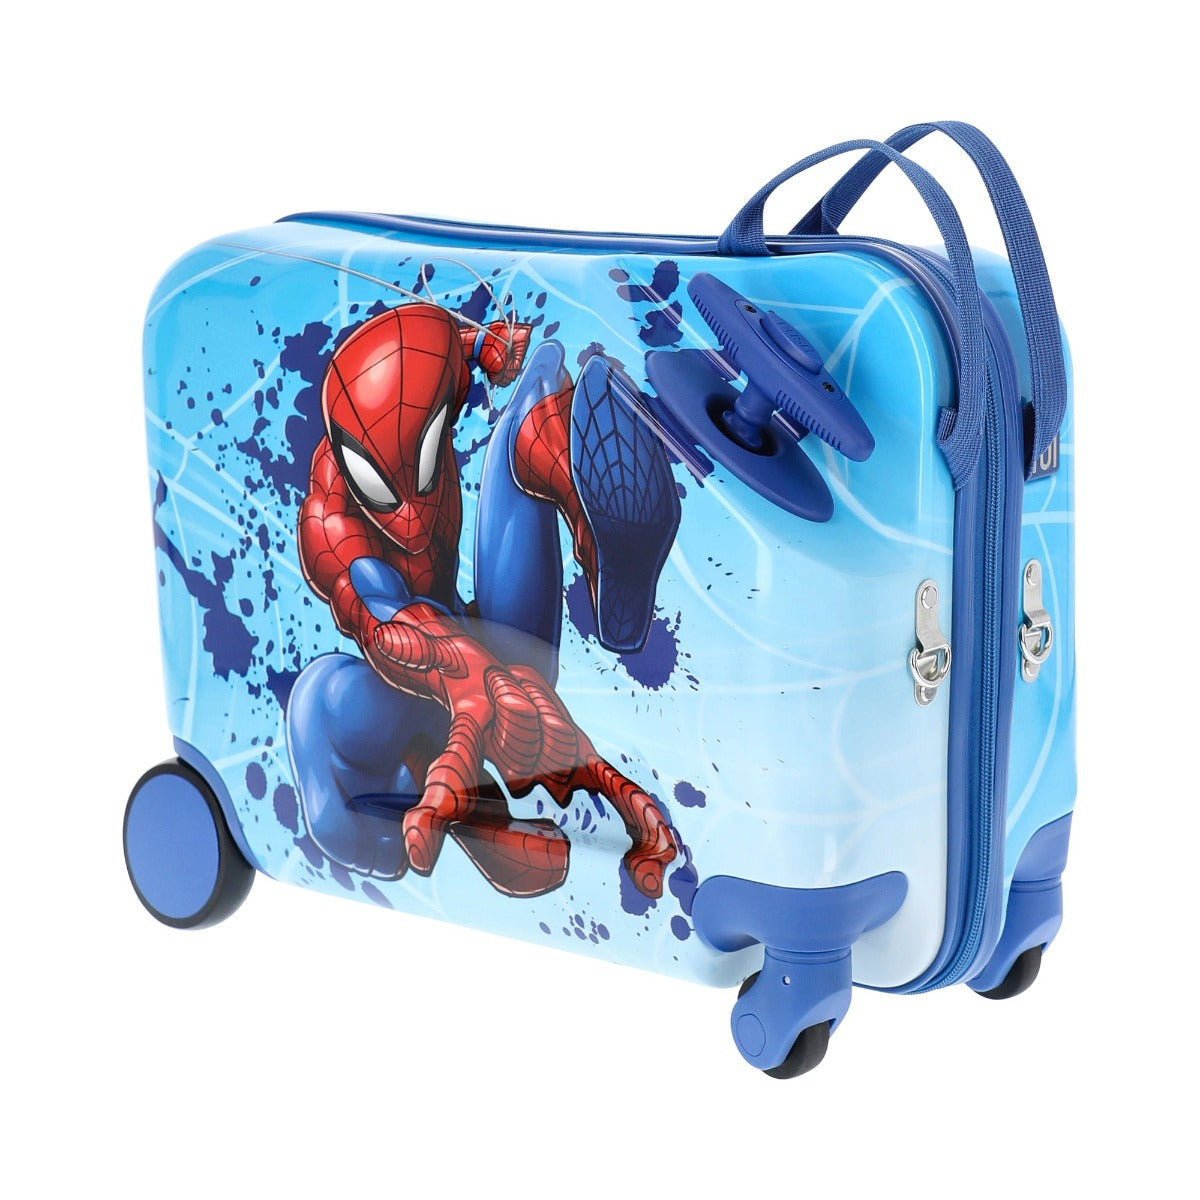 Ful Marvel Spiderman 14.5" ride-on hardside spinner suitcase for kids